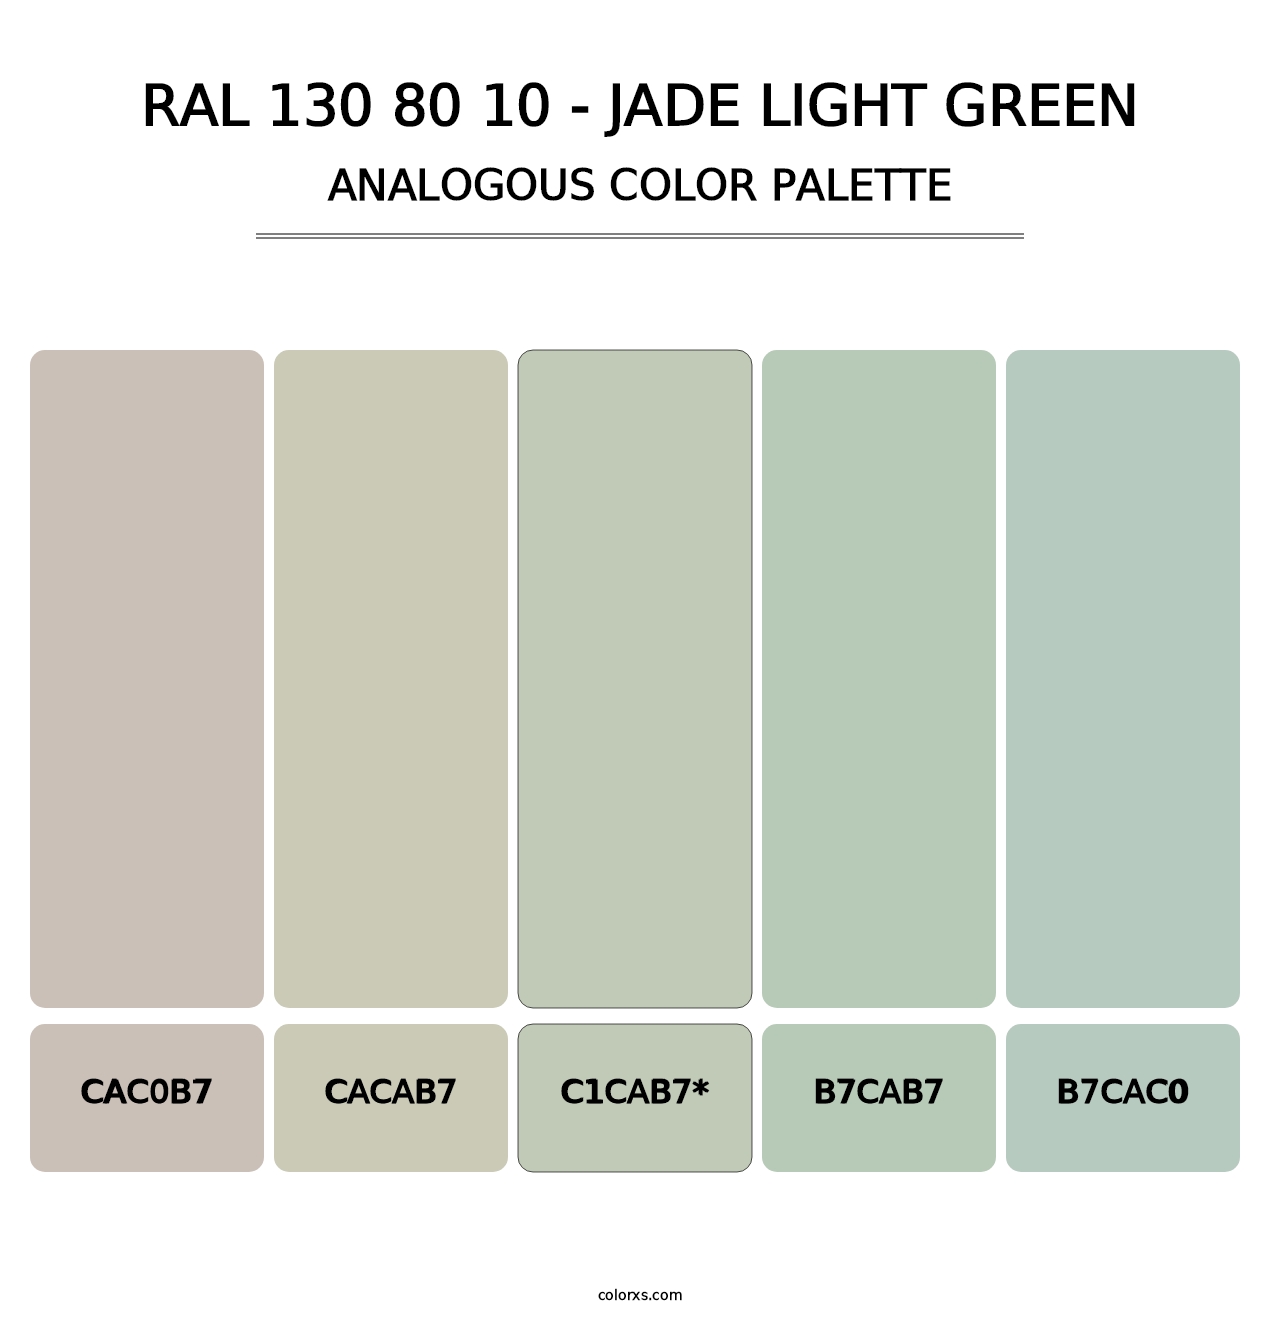 RAL 130 80 10 - Jade Light Green - Analogous Color Palette